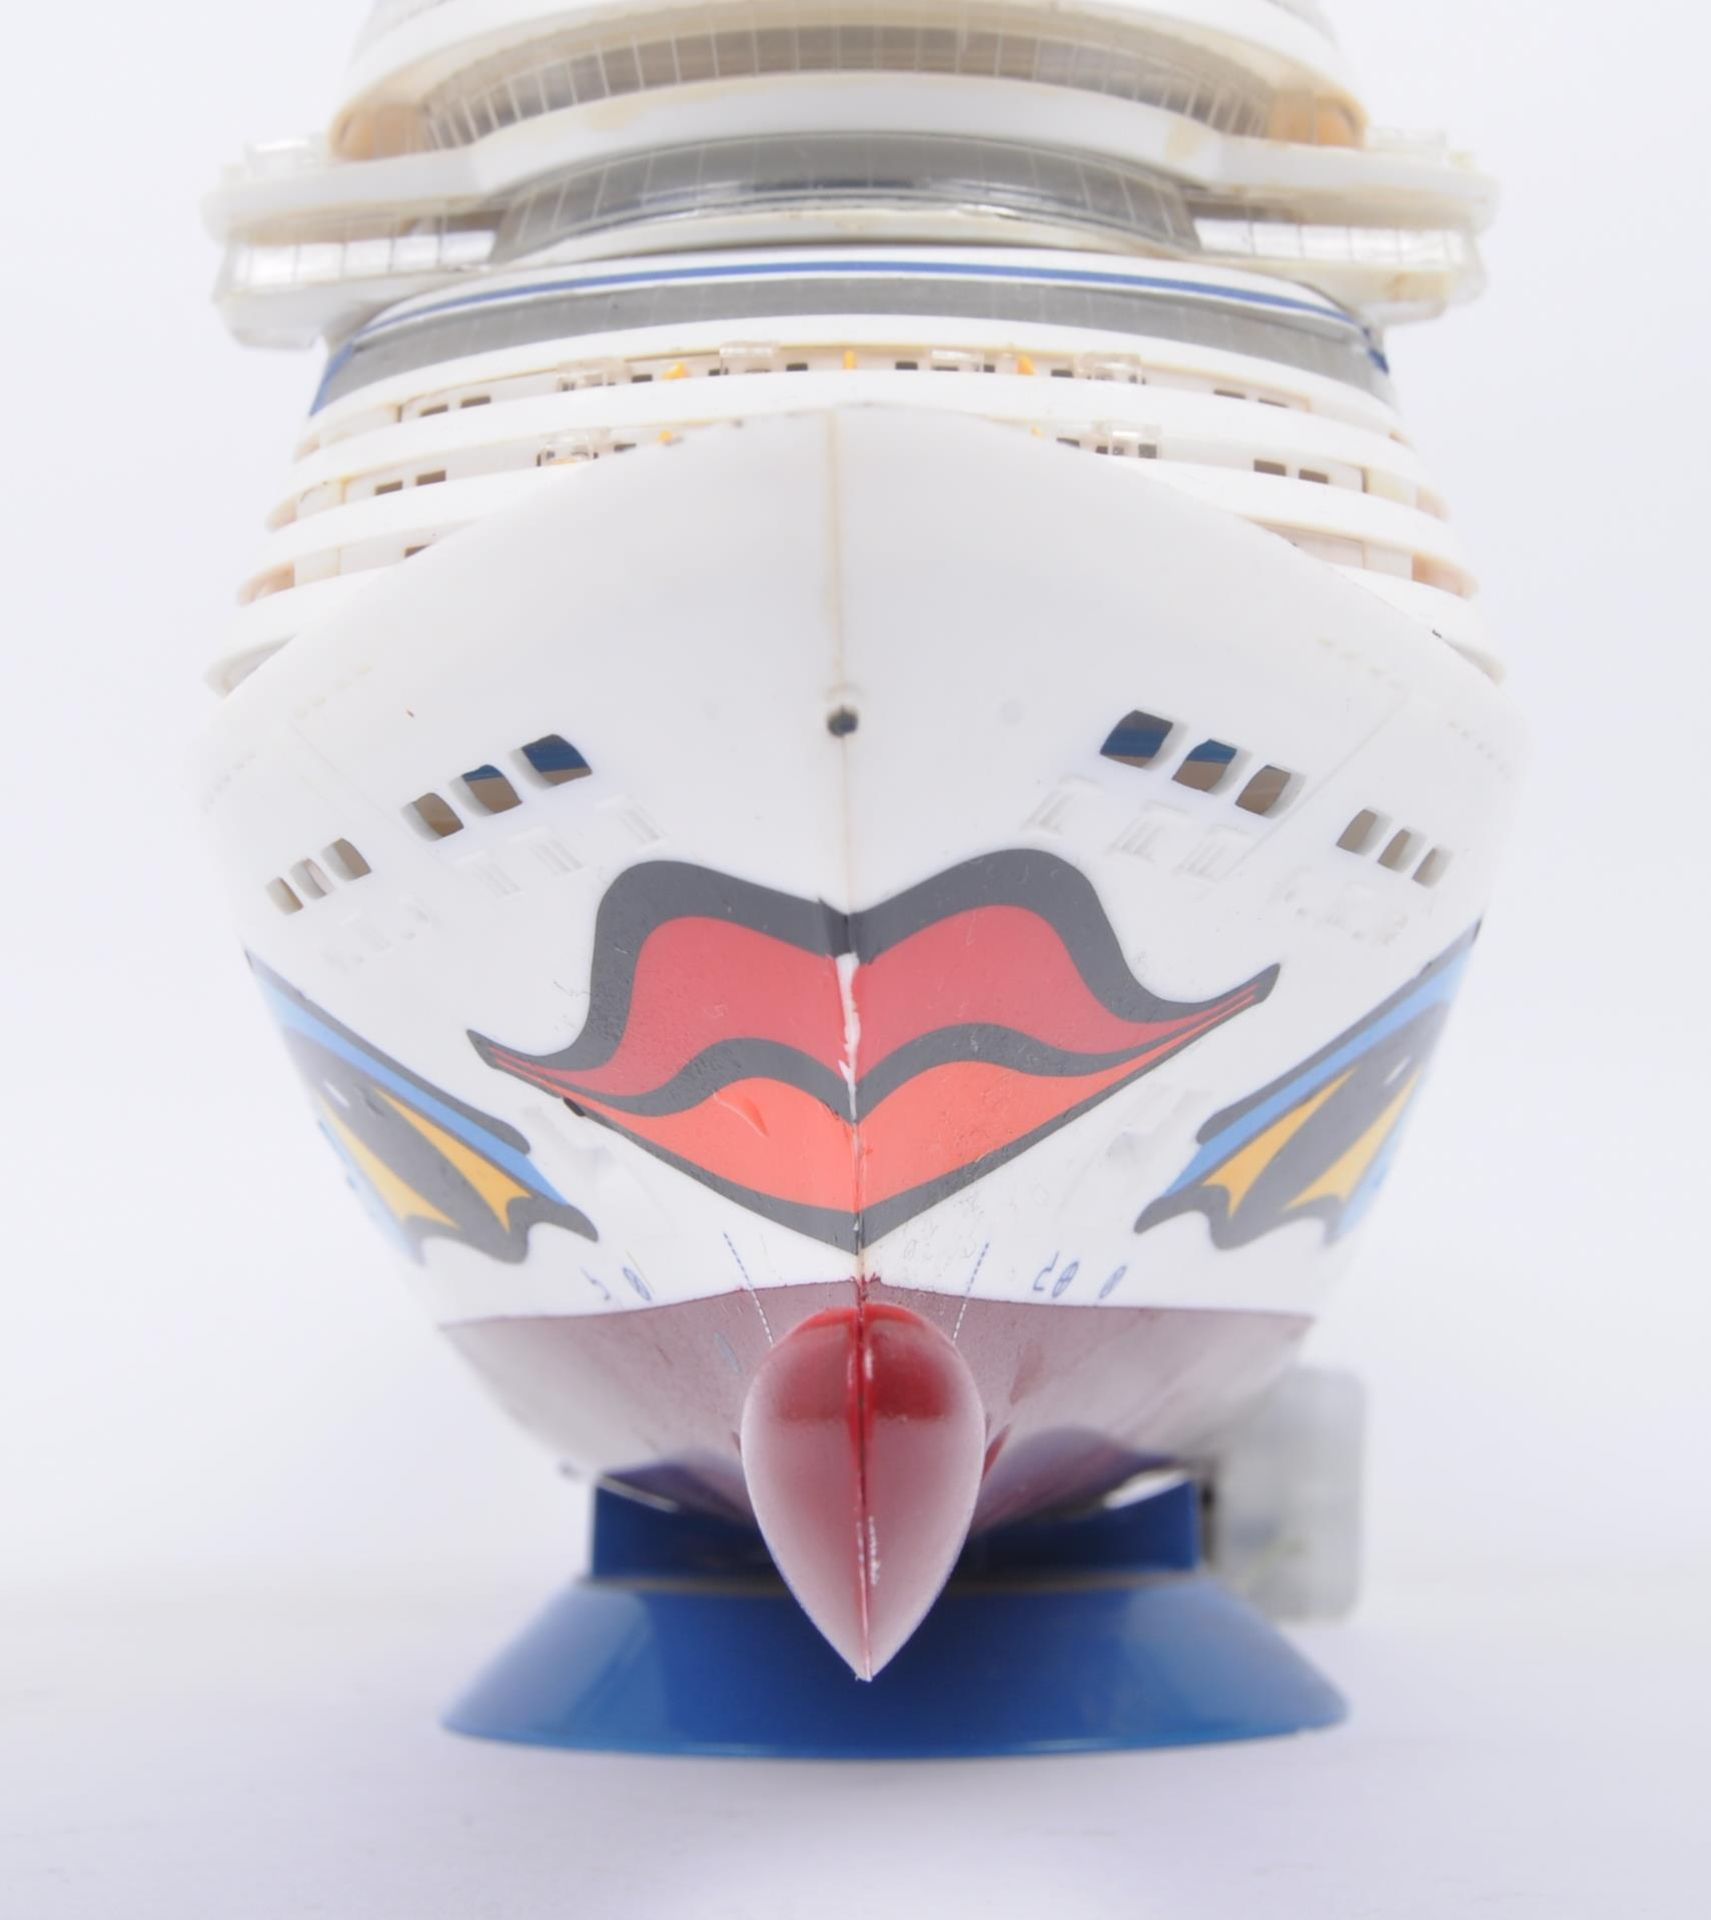 RETRO VINTAGE CRUISE SHIP TRAVELS AGENT MODEL - Image 6 of 10